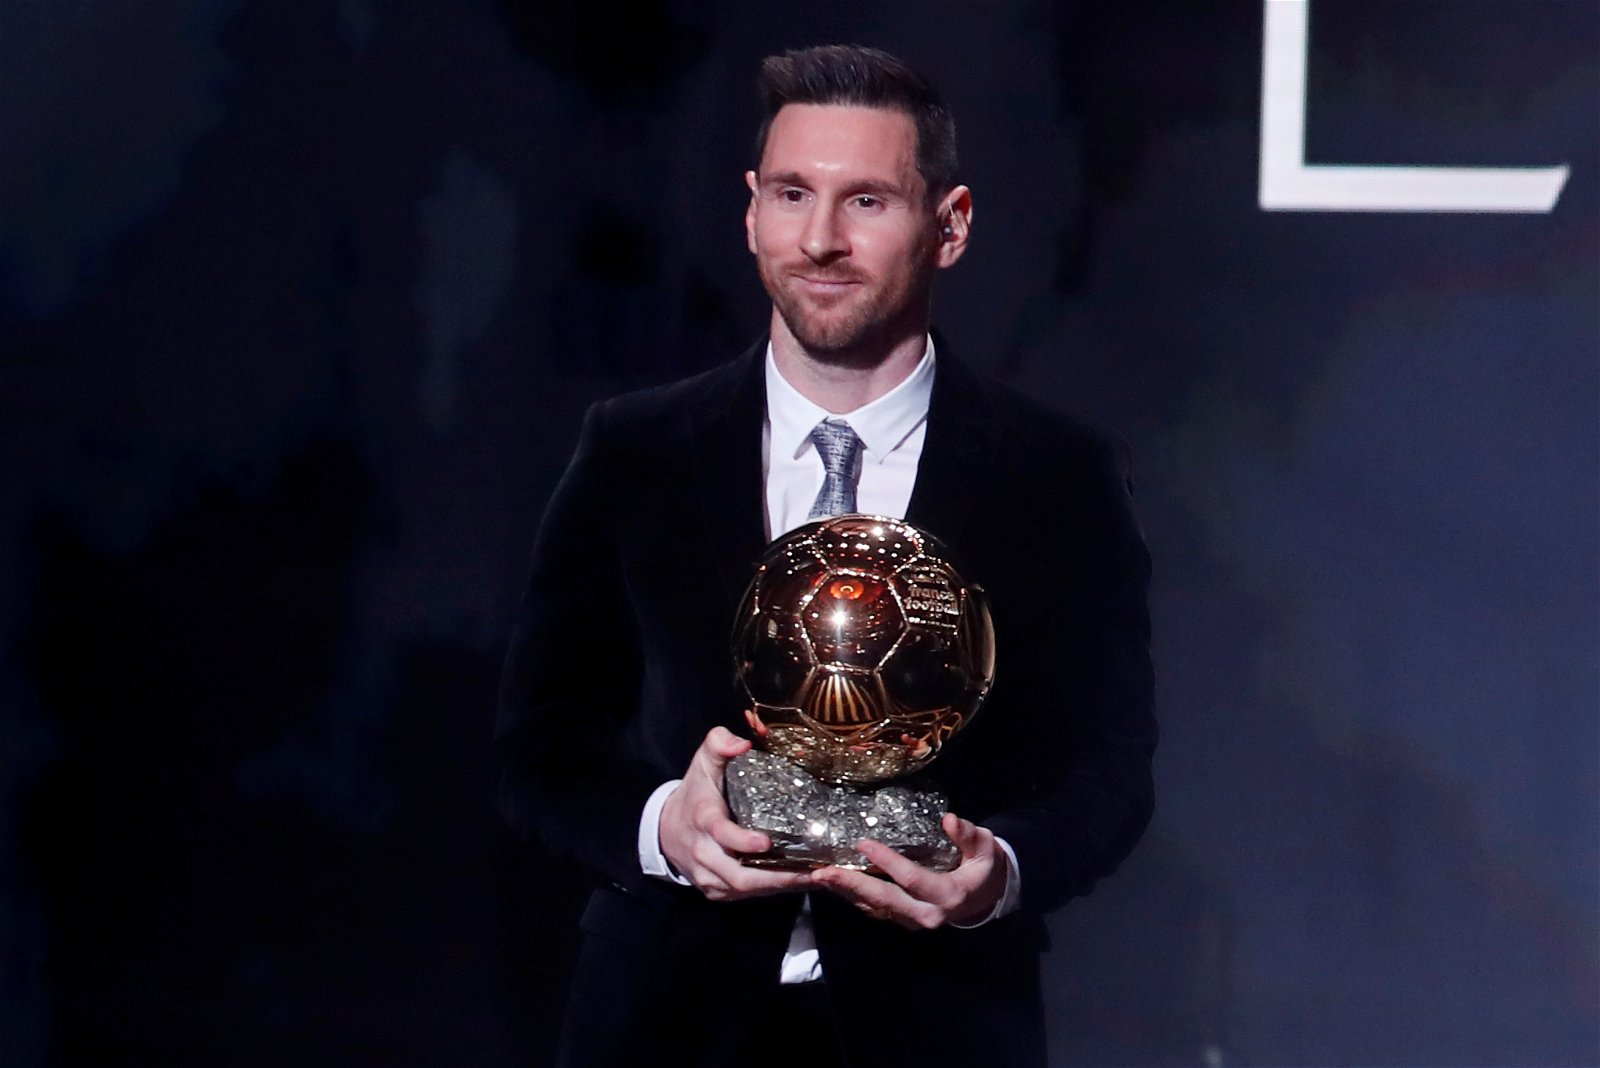 Ballon d'Or Award Winner 2019 - Lionel Messi Wins 2019 Ballon d'Or Award